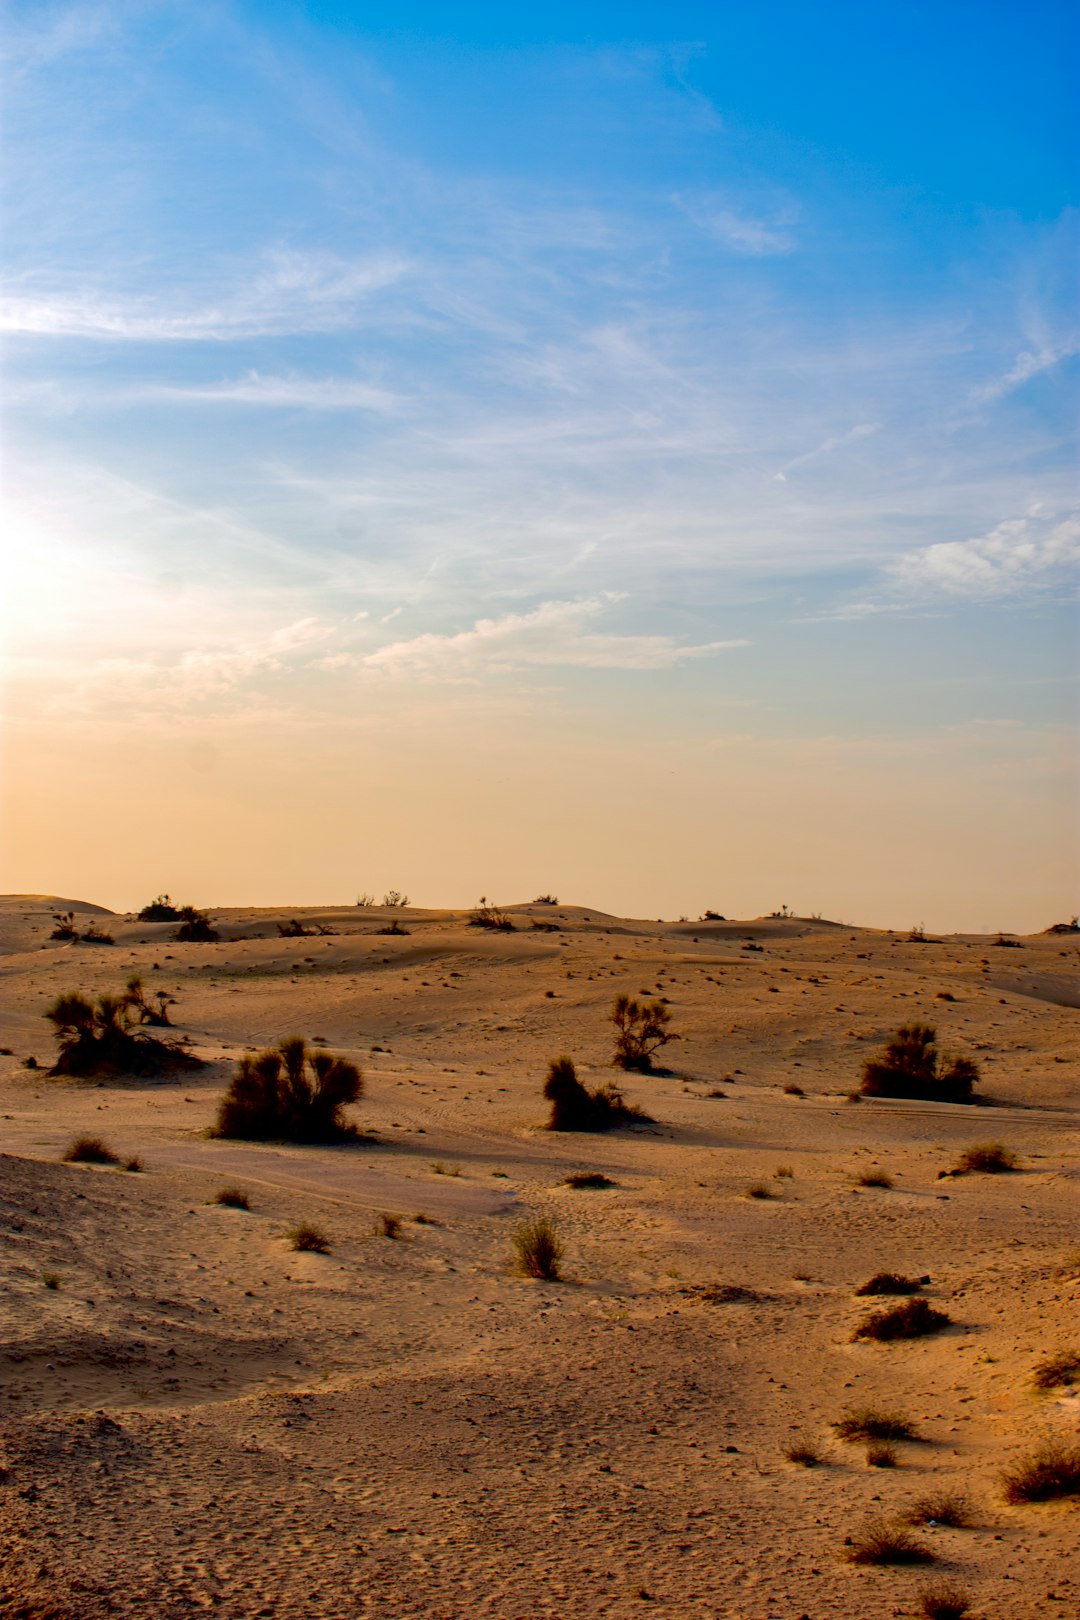 Desert photo spot Desert Safari Dubai - Dubai - United Arab Emirates Sharjah Desert Park